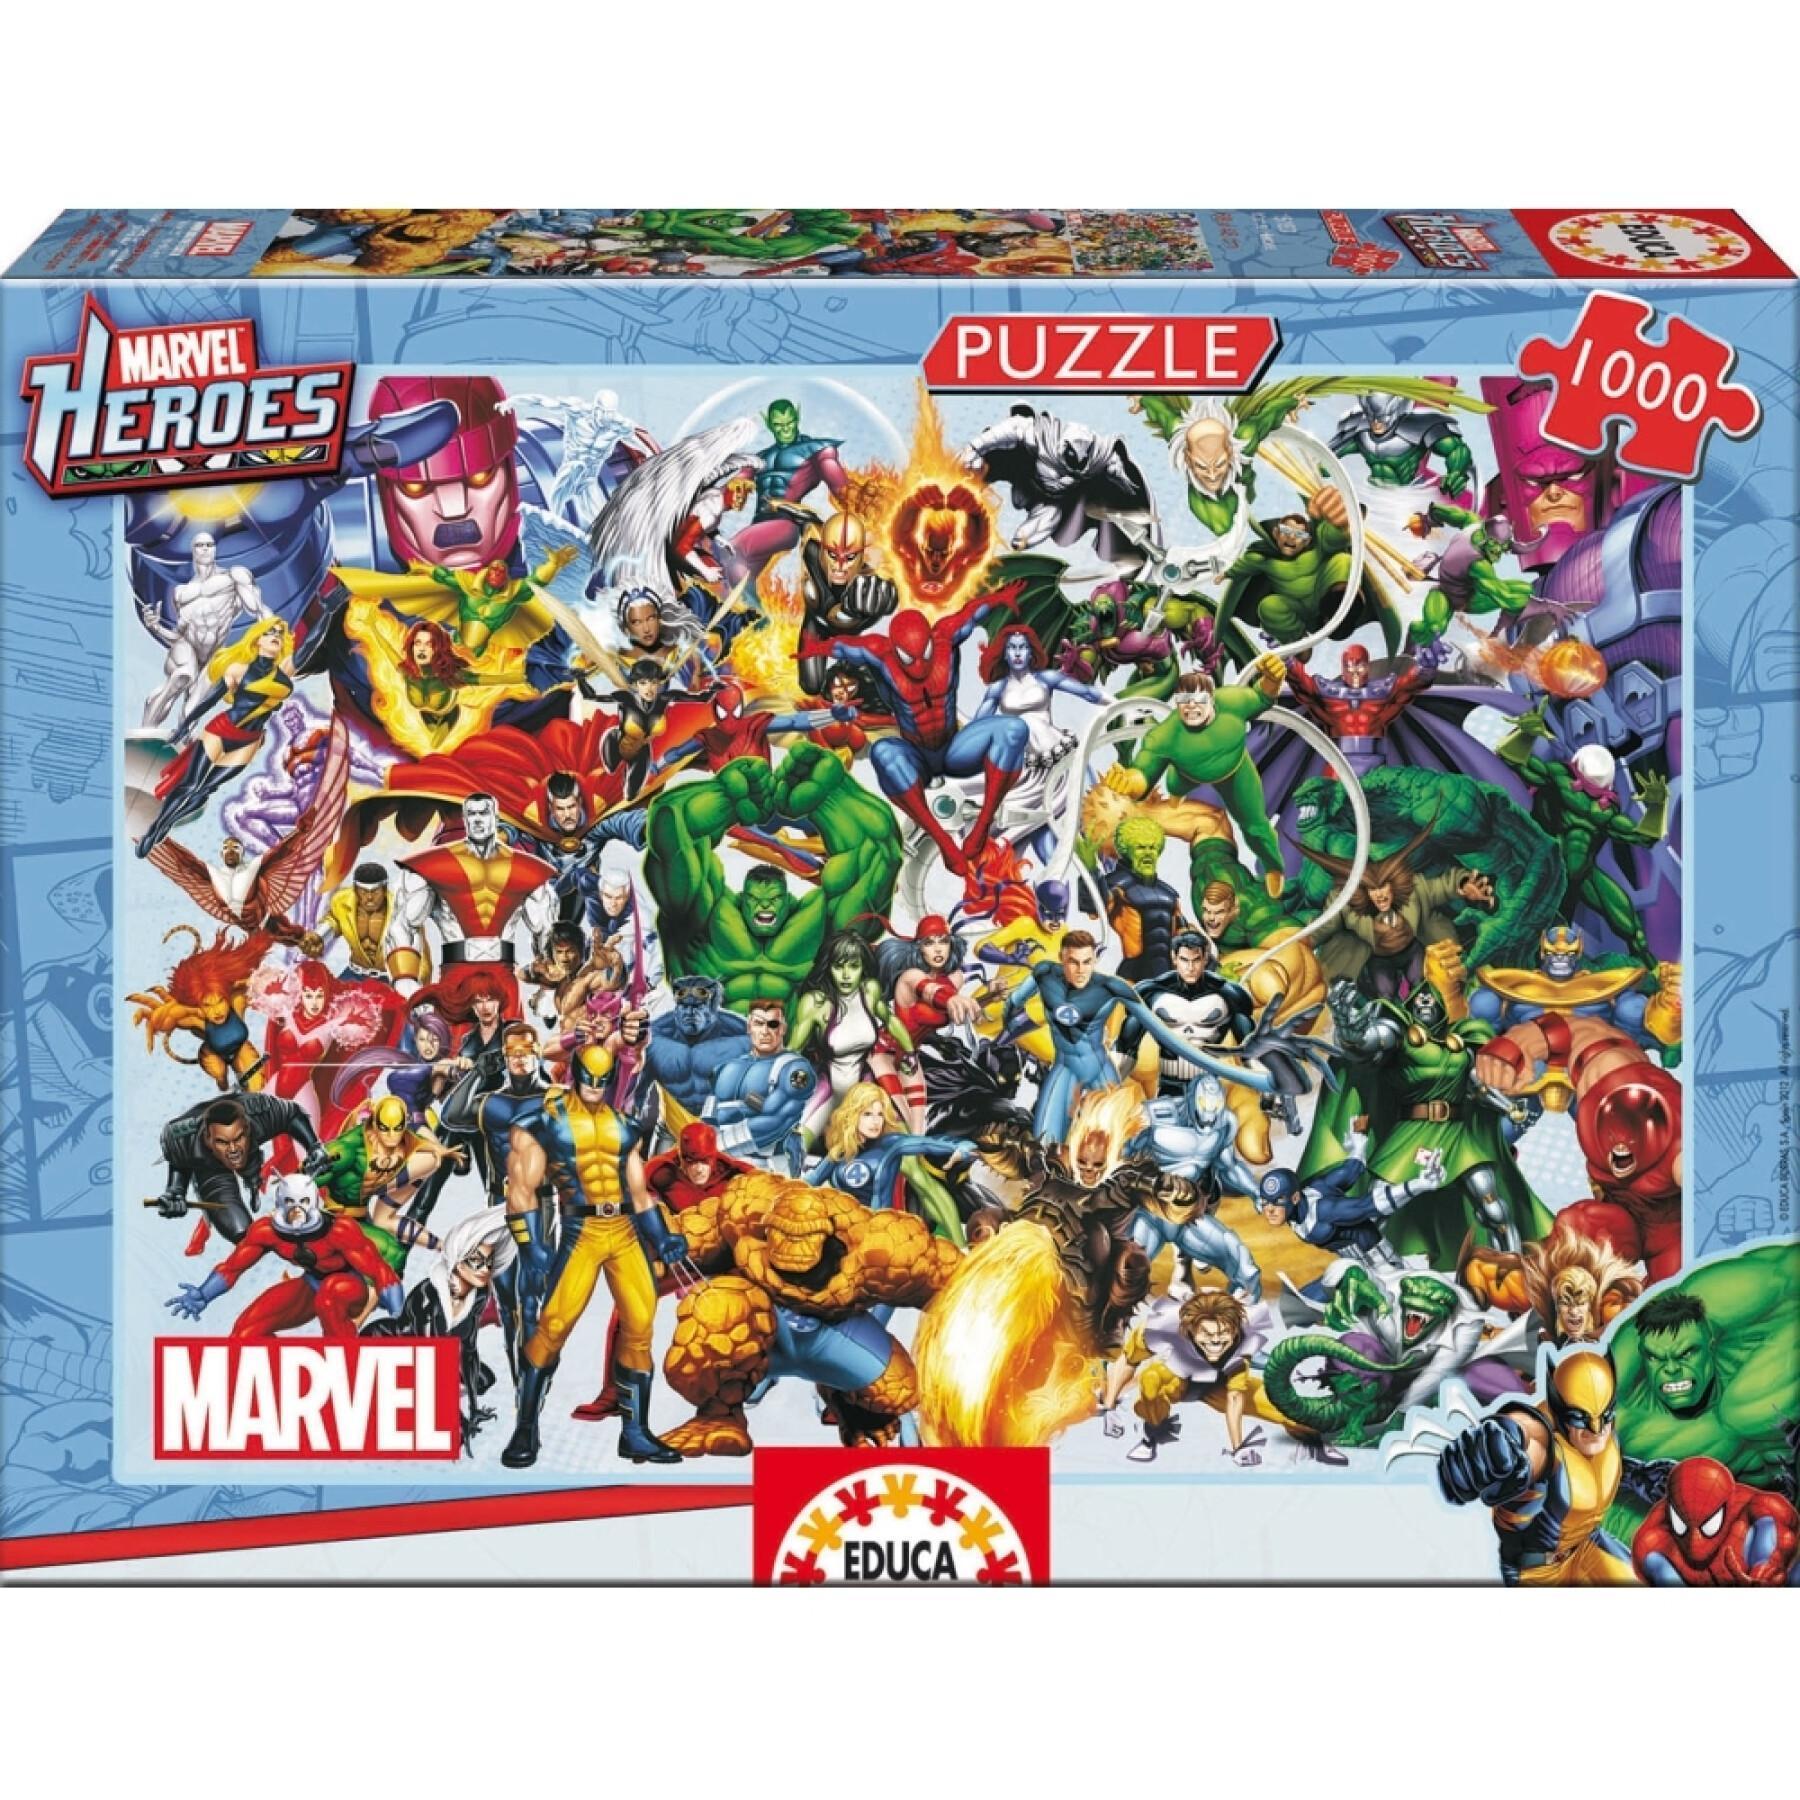 Puzzle da 1000 pezzi Avengers Marvel Heroes